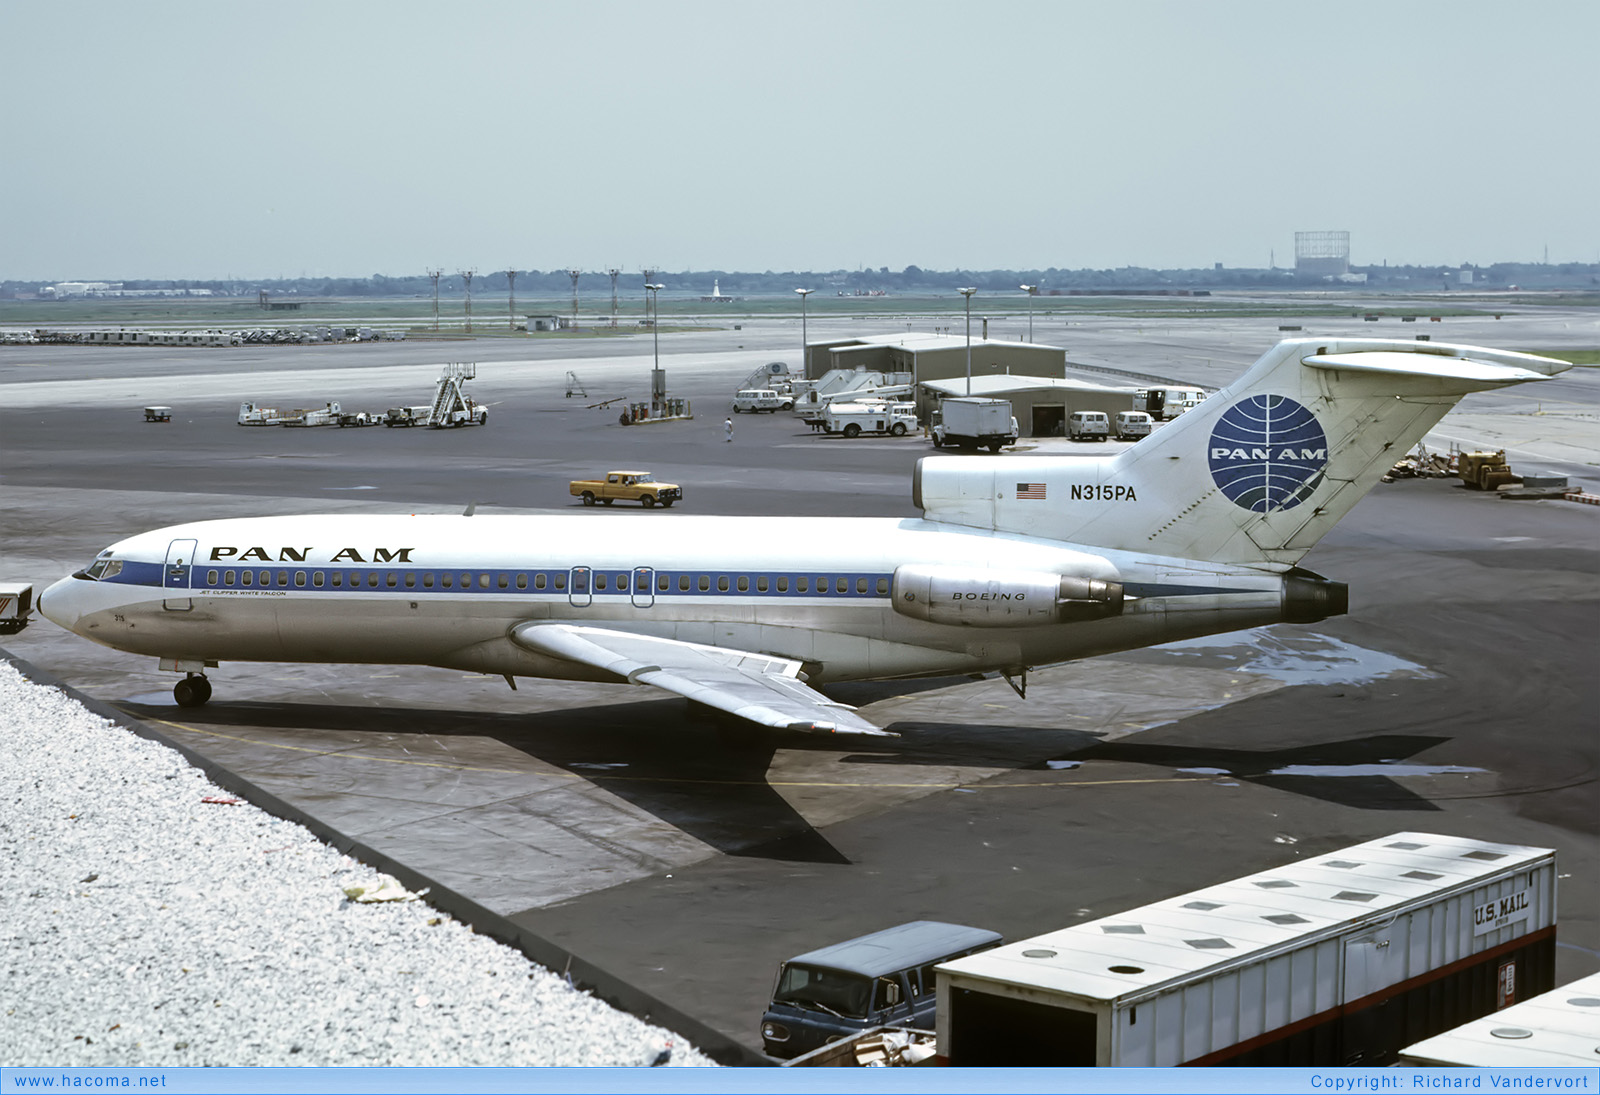 Photo of N315PA - Pan Am Clipper White Falcon / Berlin / Pocahontas / Duesseldorf - John F. Kennedy International Airport - Aug 1973